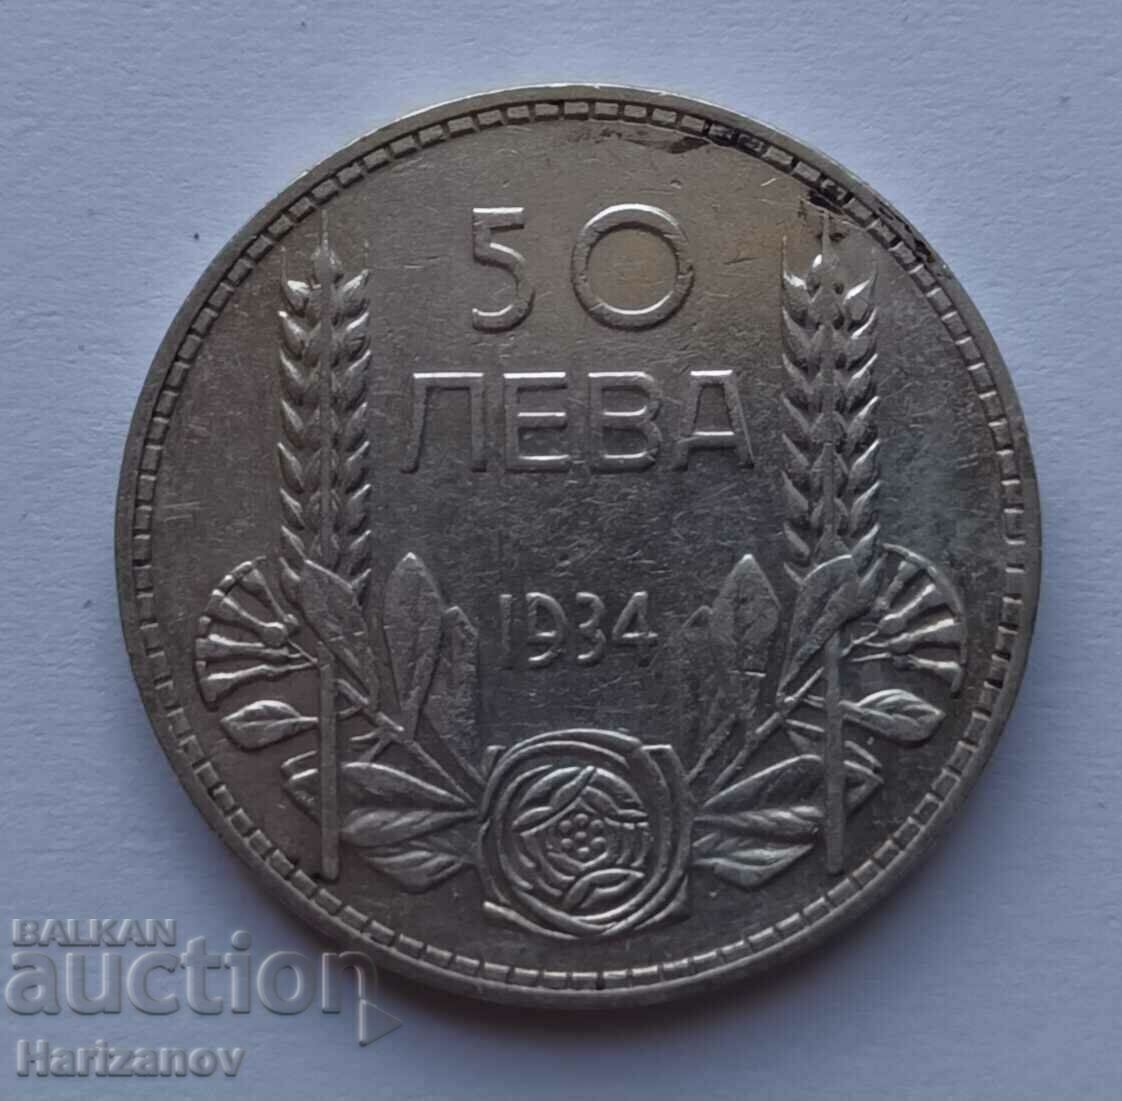 50 BGN 1934 Silver, gloss, relief